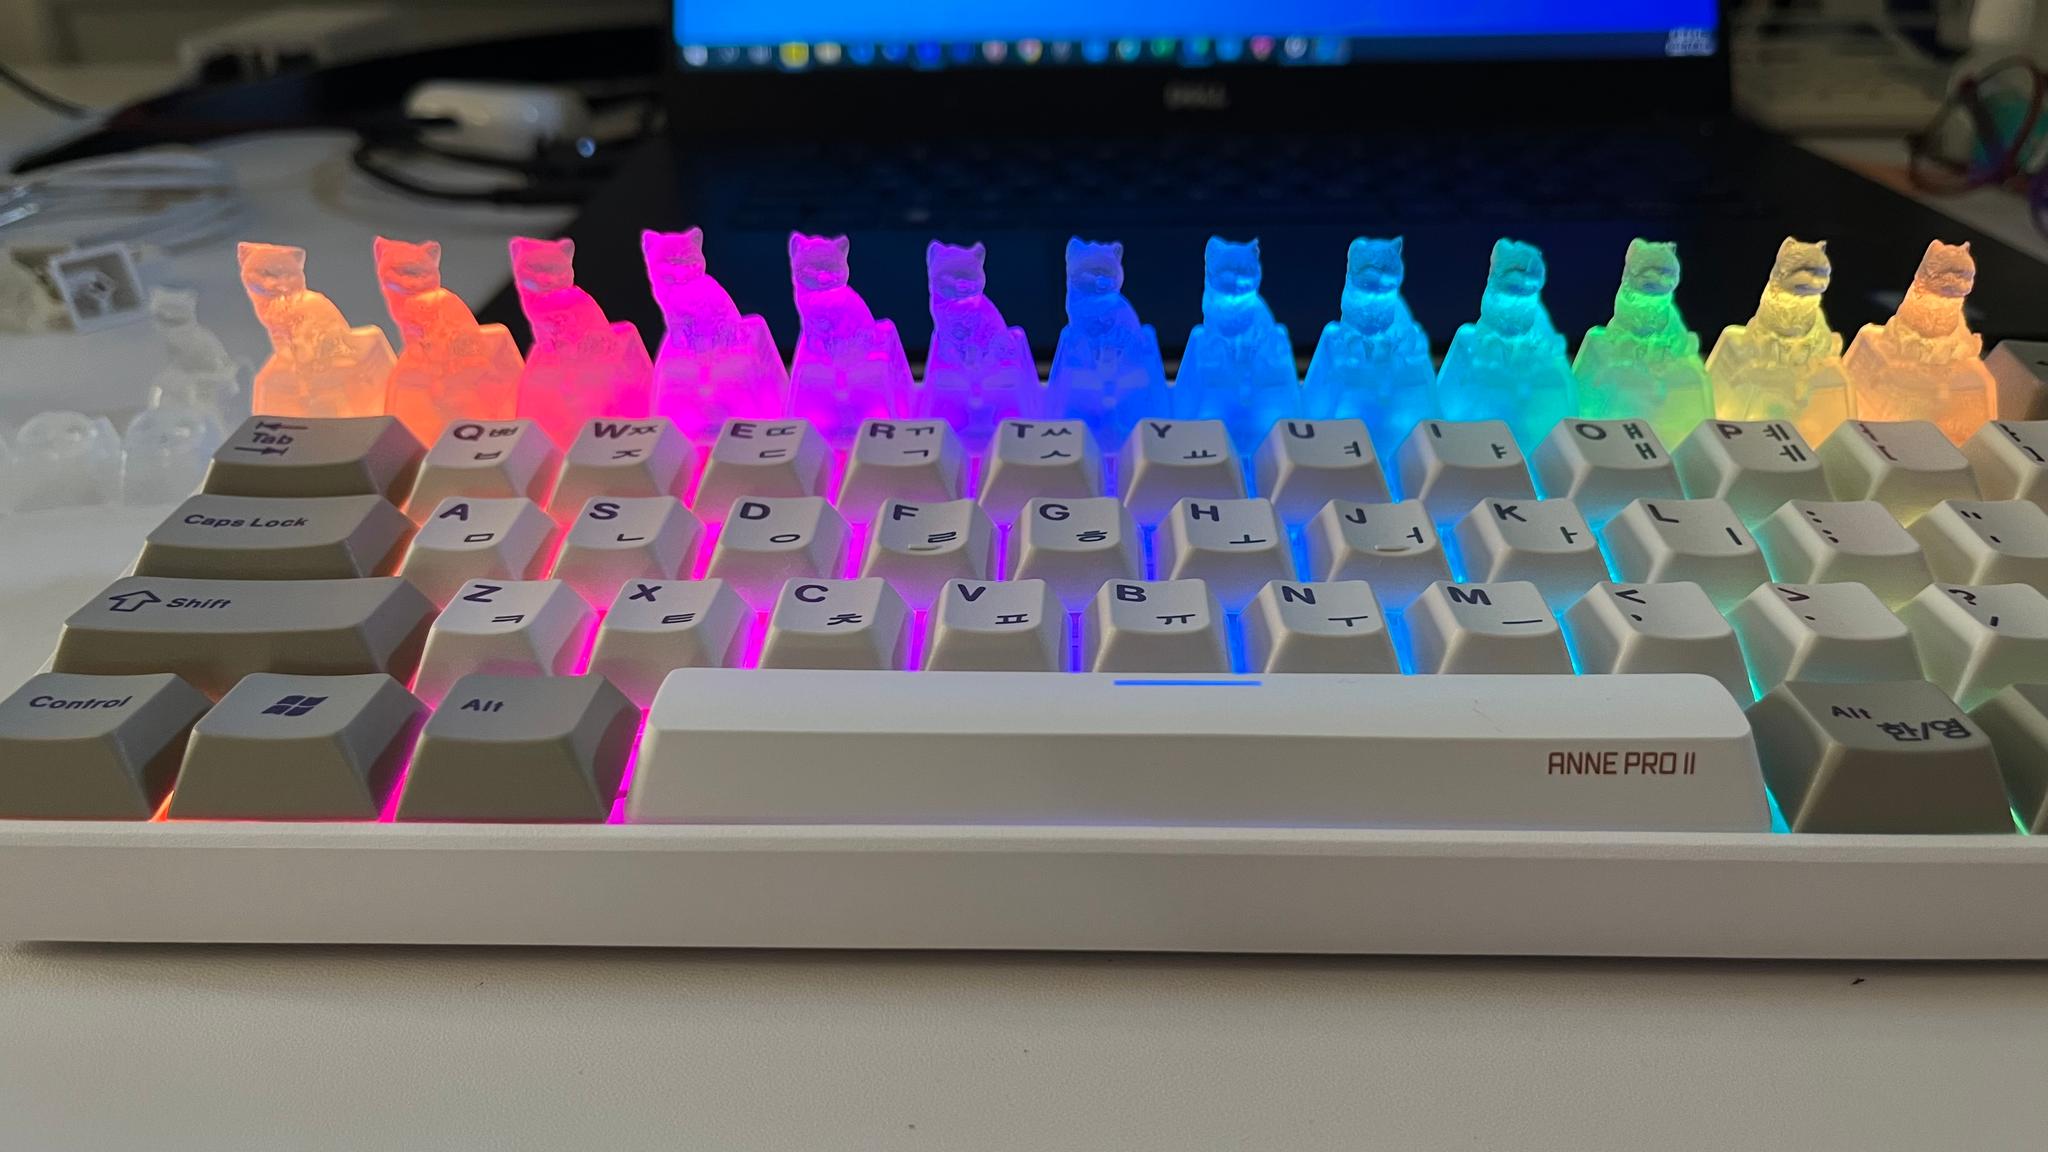 Cat Keycaps on keyboard.